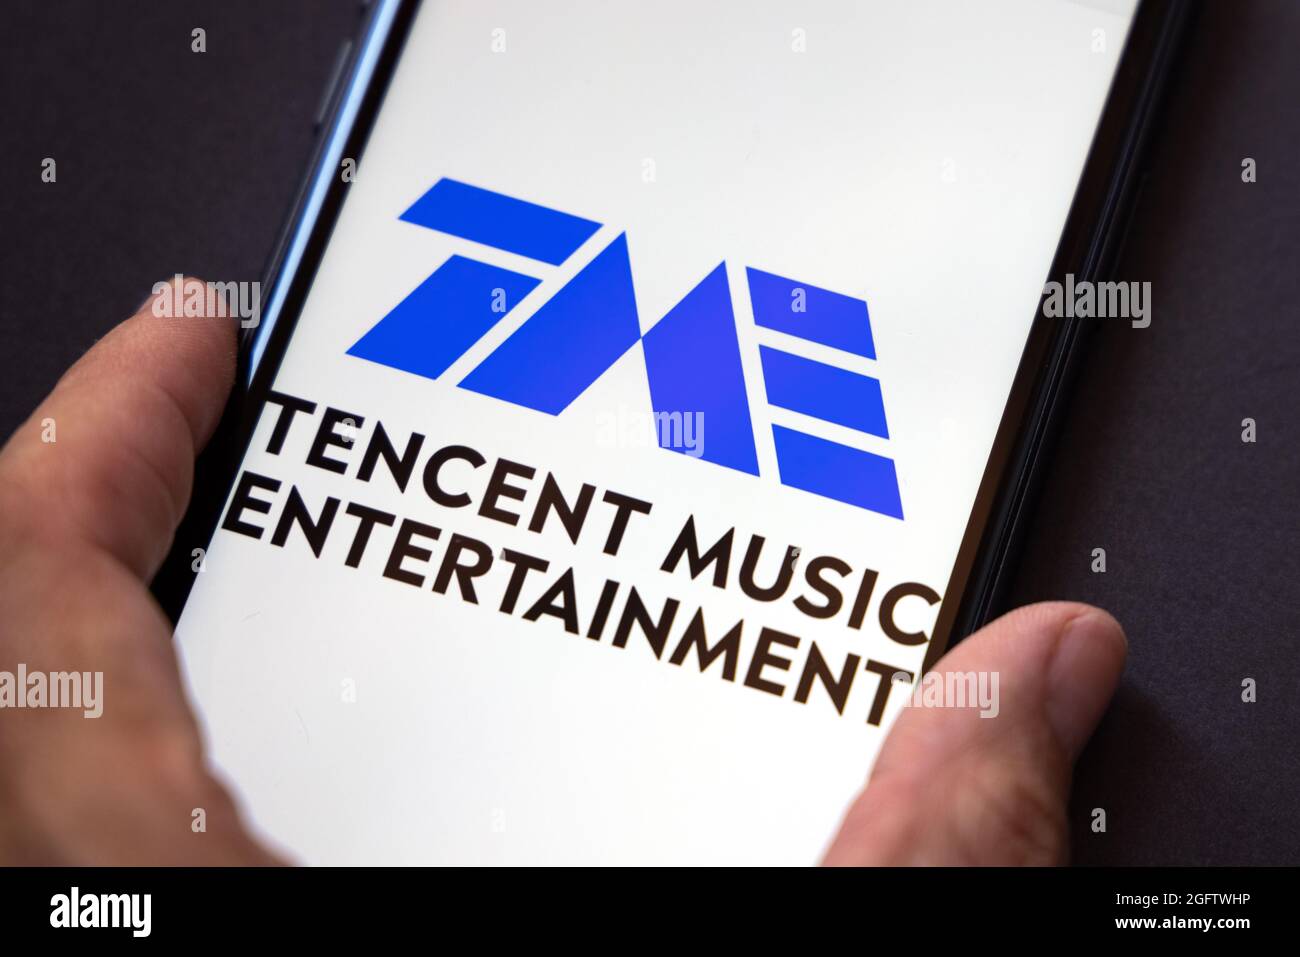 Tencent music